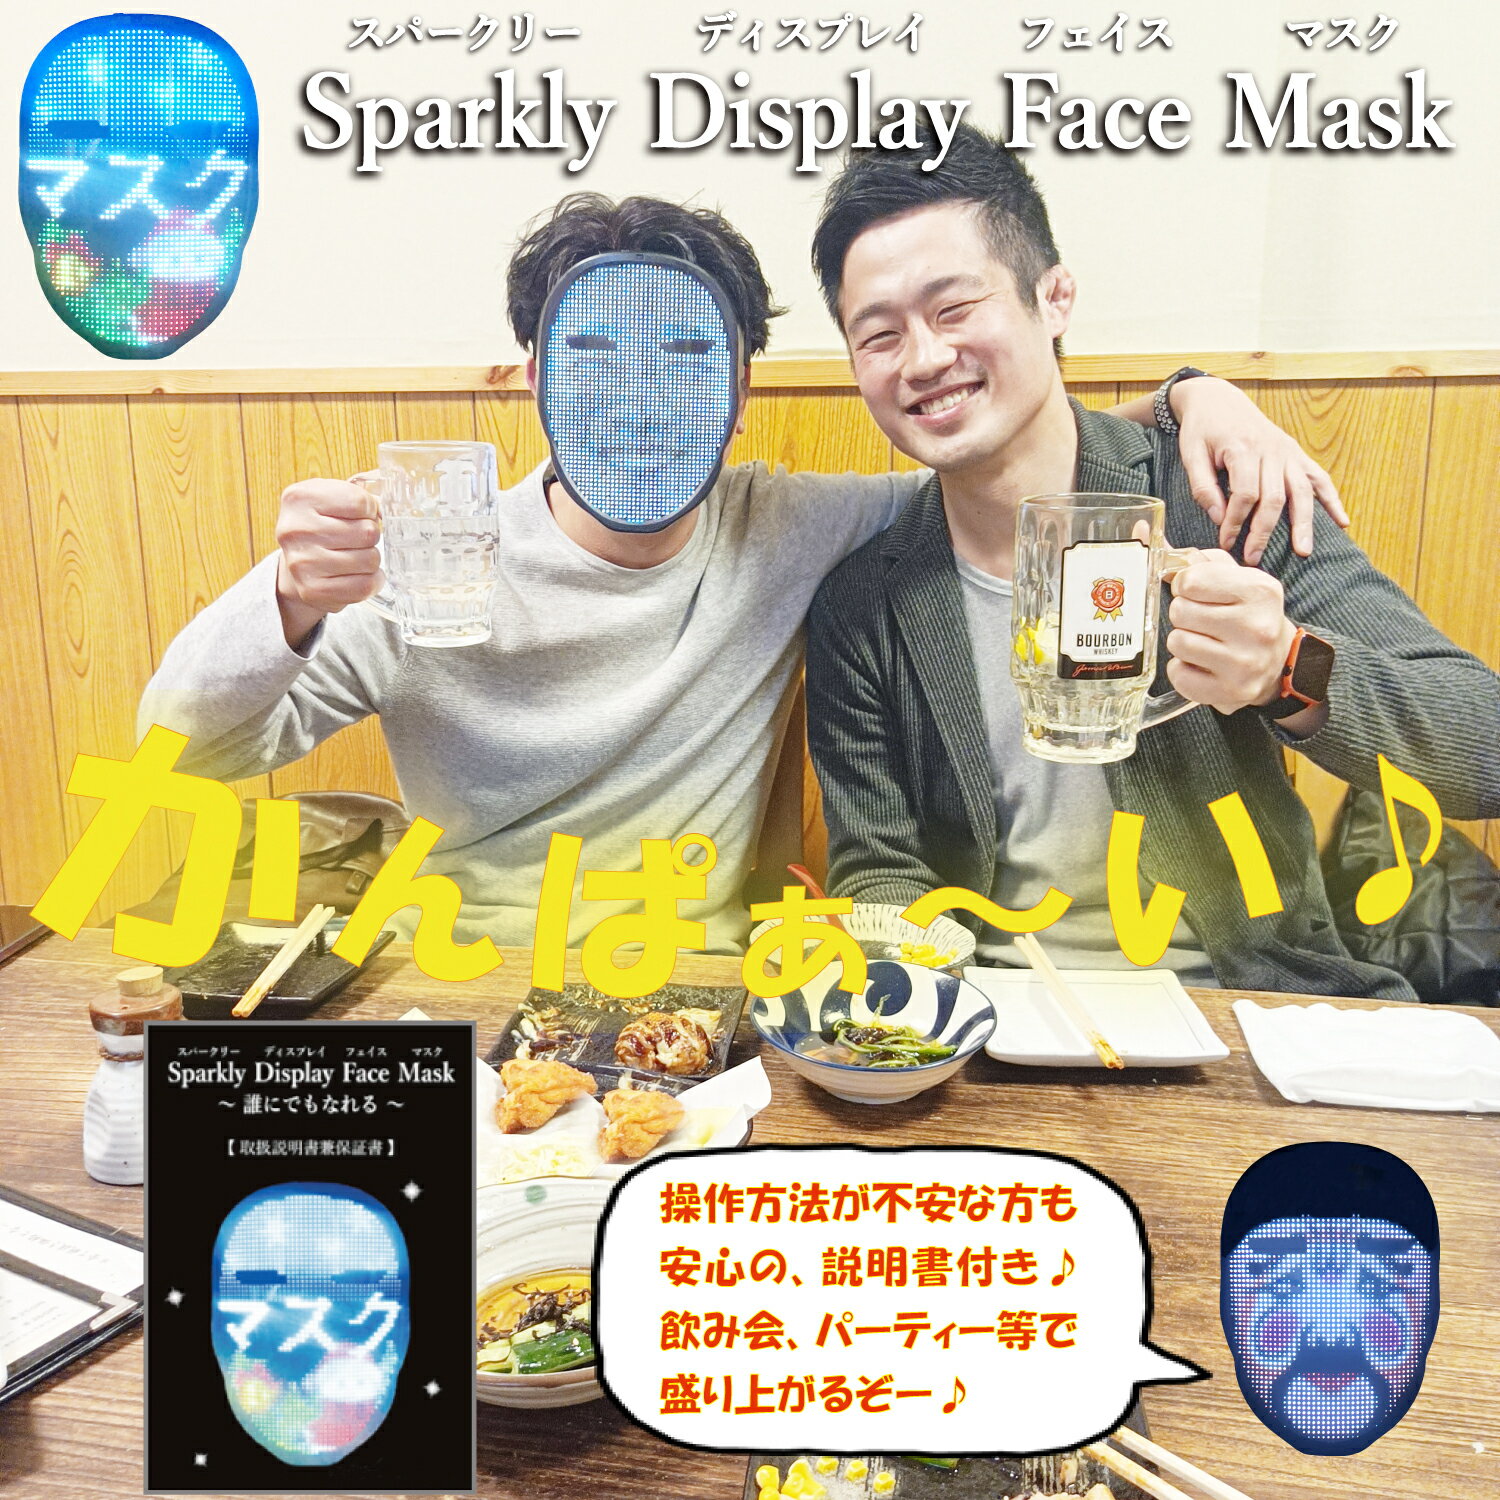 Sparkly Display Face Mask スパークリーディスプレイフェイスマスク LEDマスク 光るマスク 文字マスク おもしろマスク パーティーグッズ おもしろグッズ 仮面 単3電池式 フリーサイズ 男女兼用 日本語説明書兼保証書付き